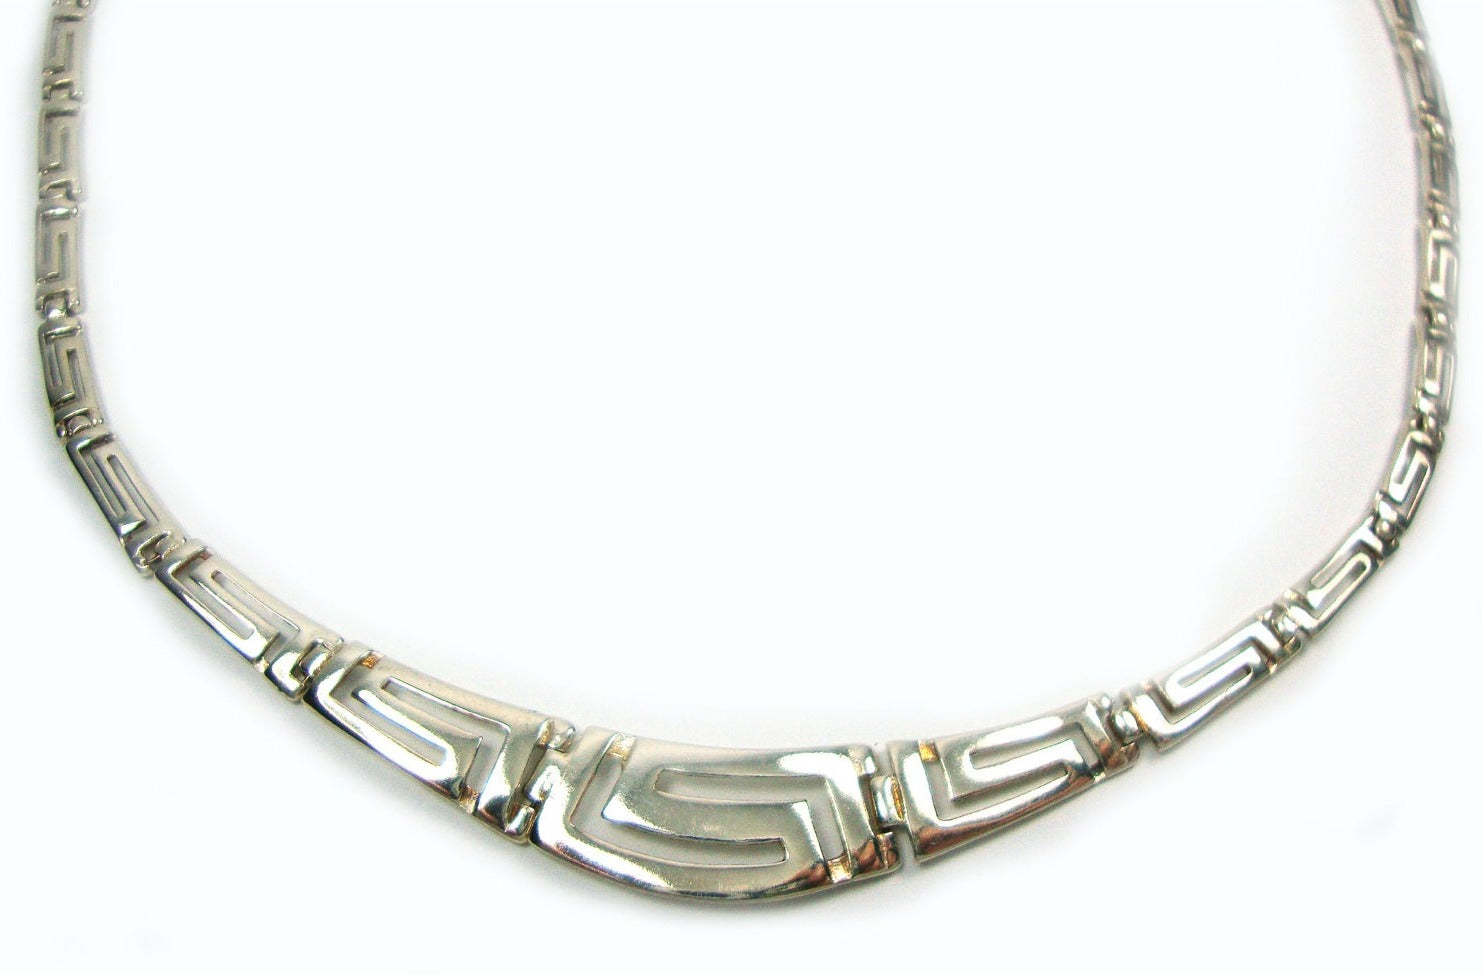 Greek Key Necklace